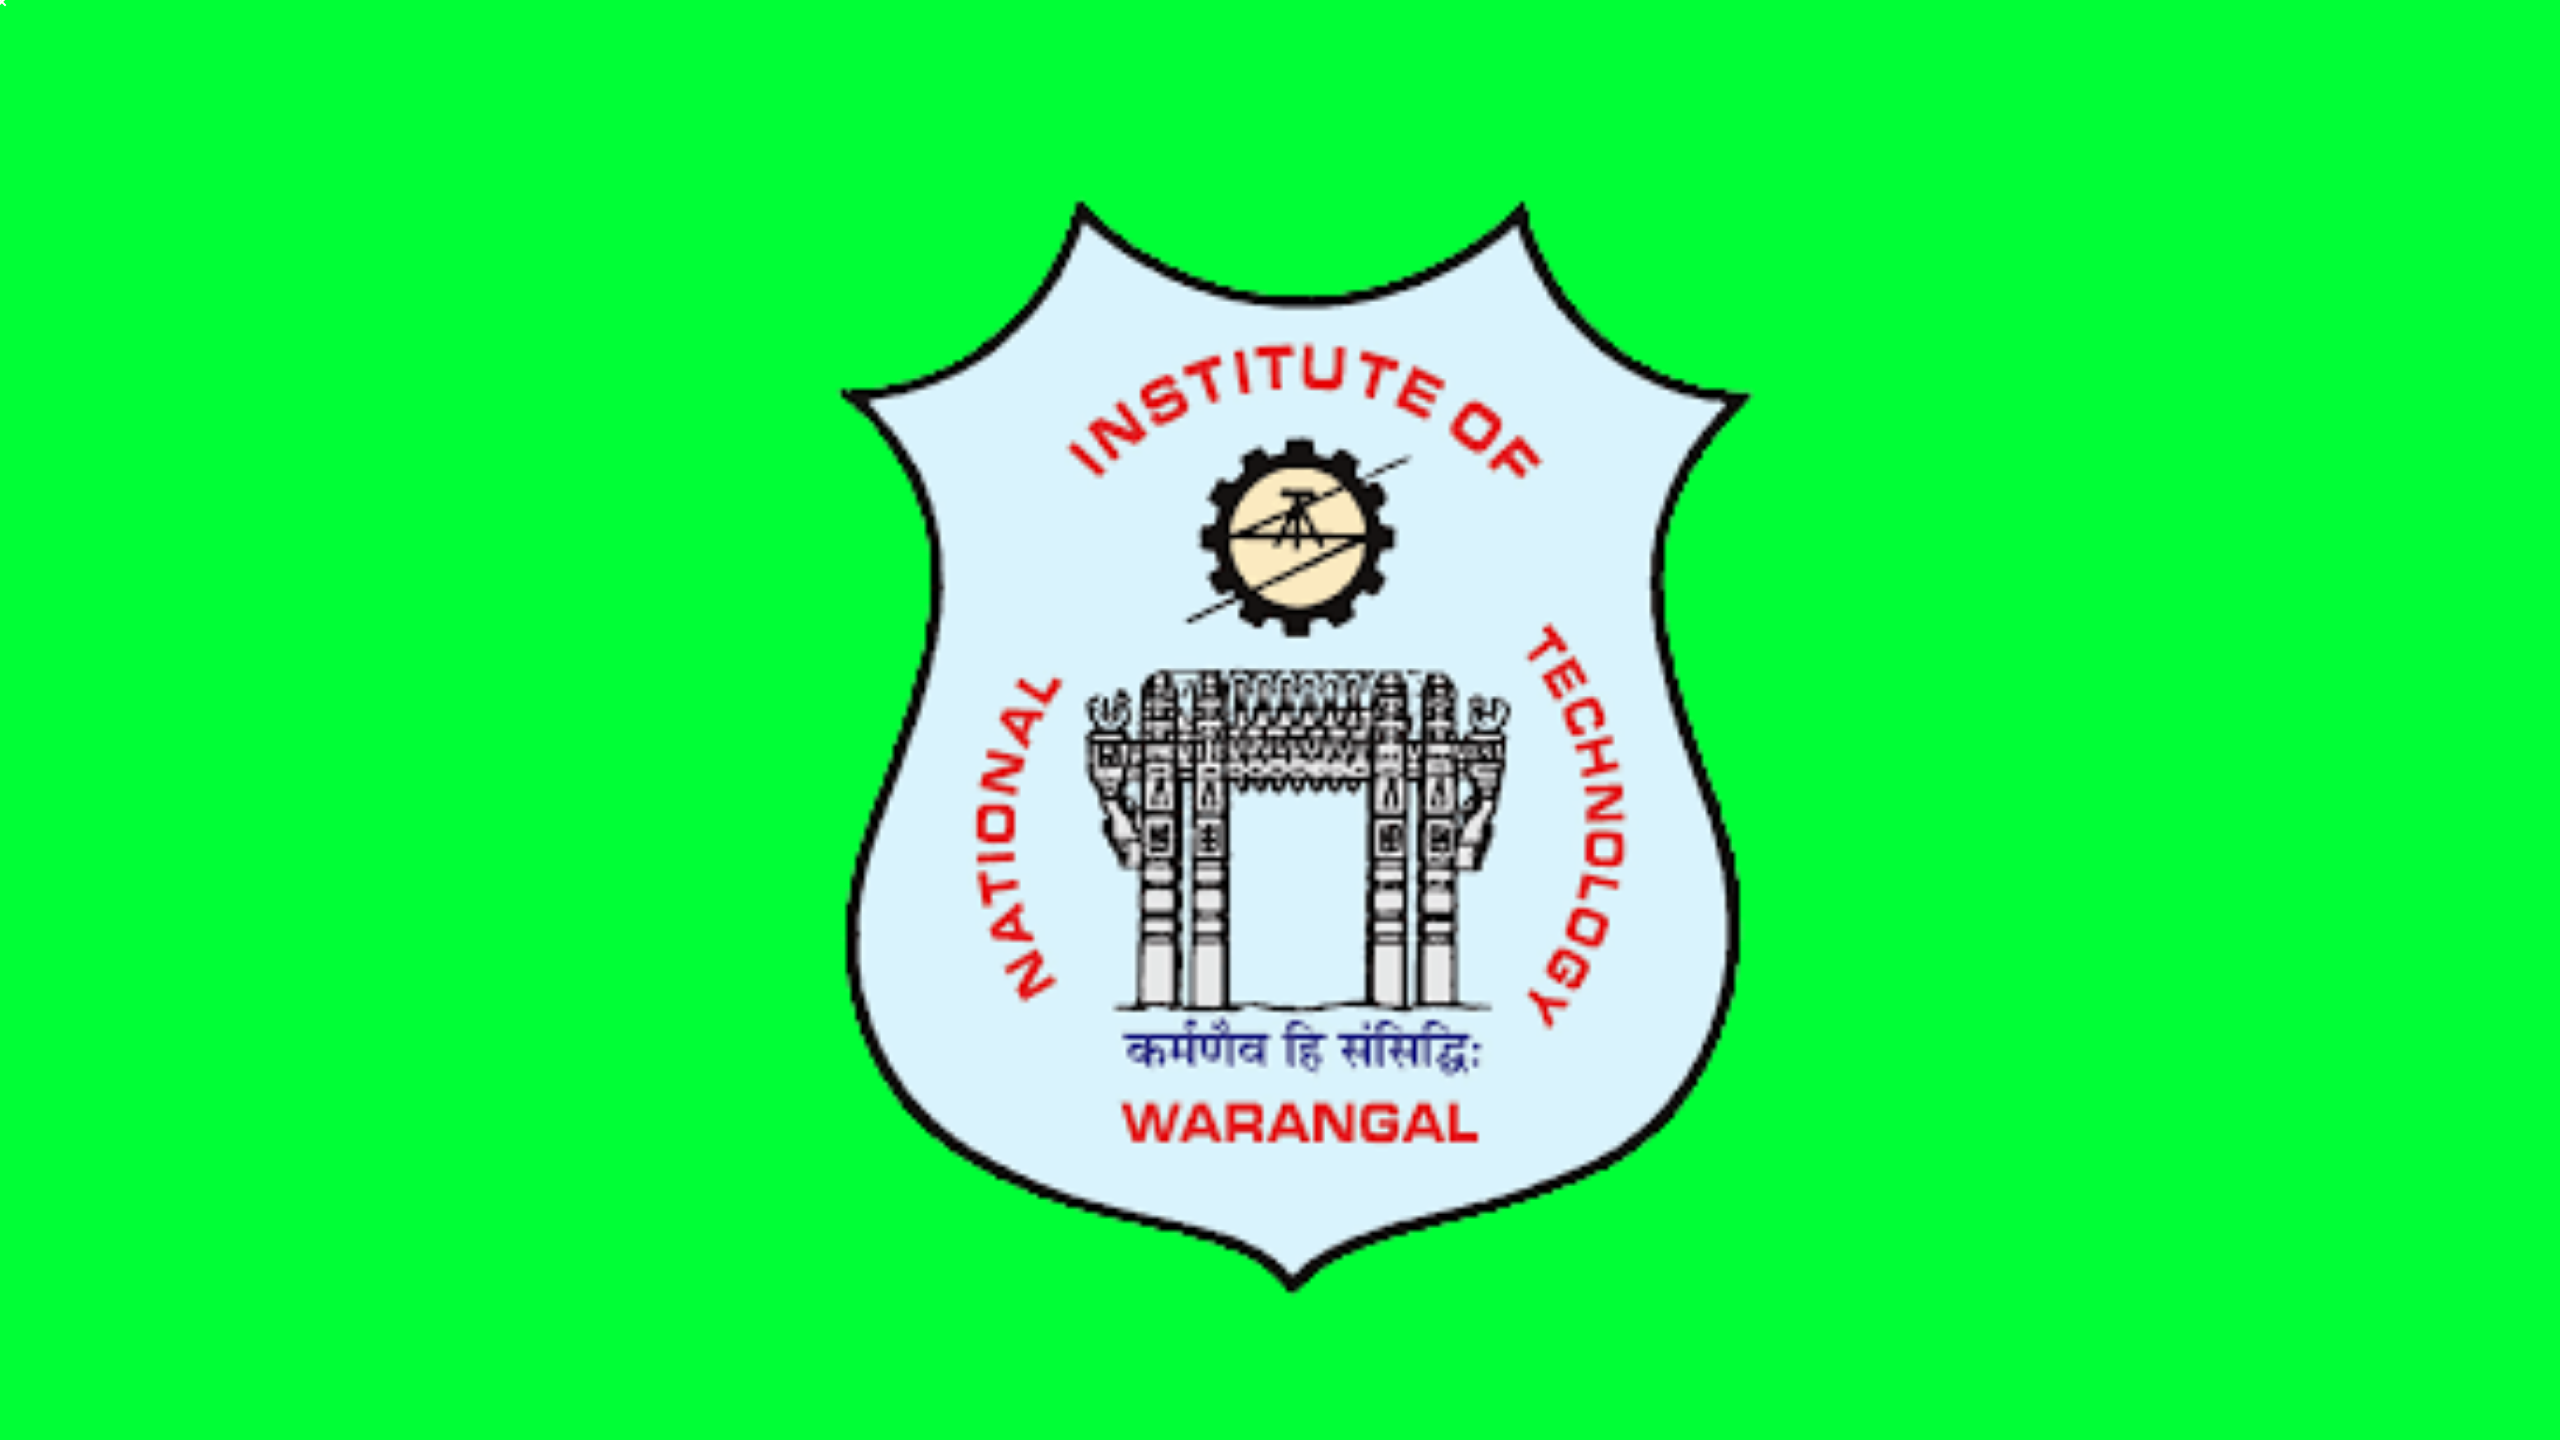 National Institute Of Technology Warangal, Nit Warangal Recruitment, Nit Warangal, Nit Warangal Job Vacancy Notification, Nit Warangal Recruitment 2021